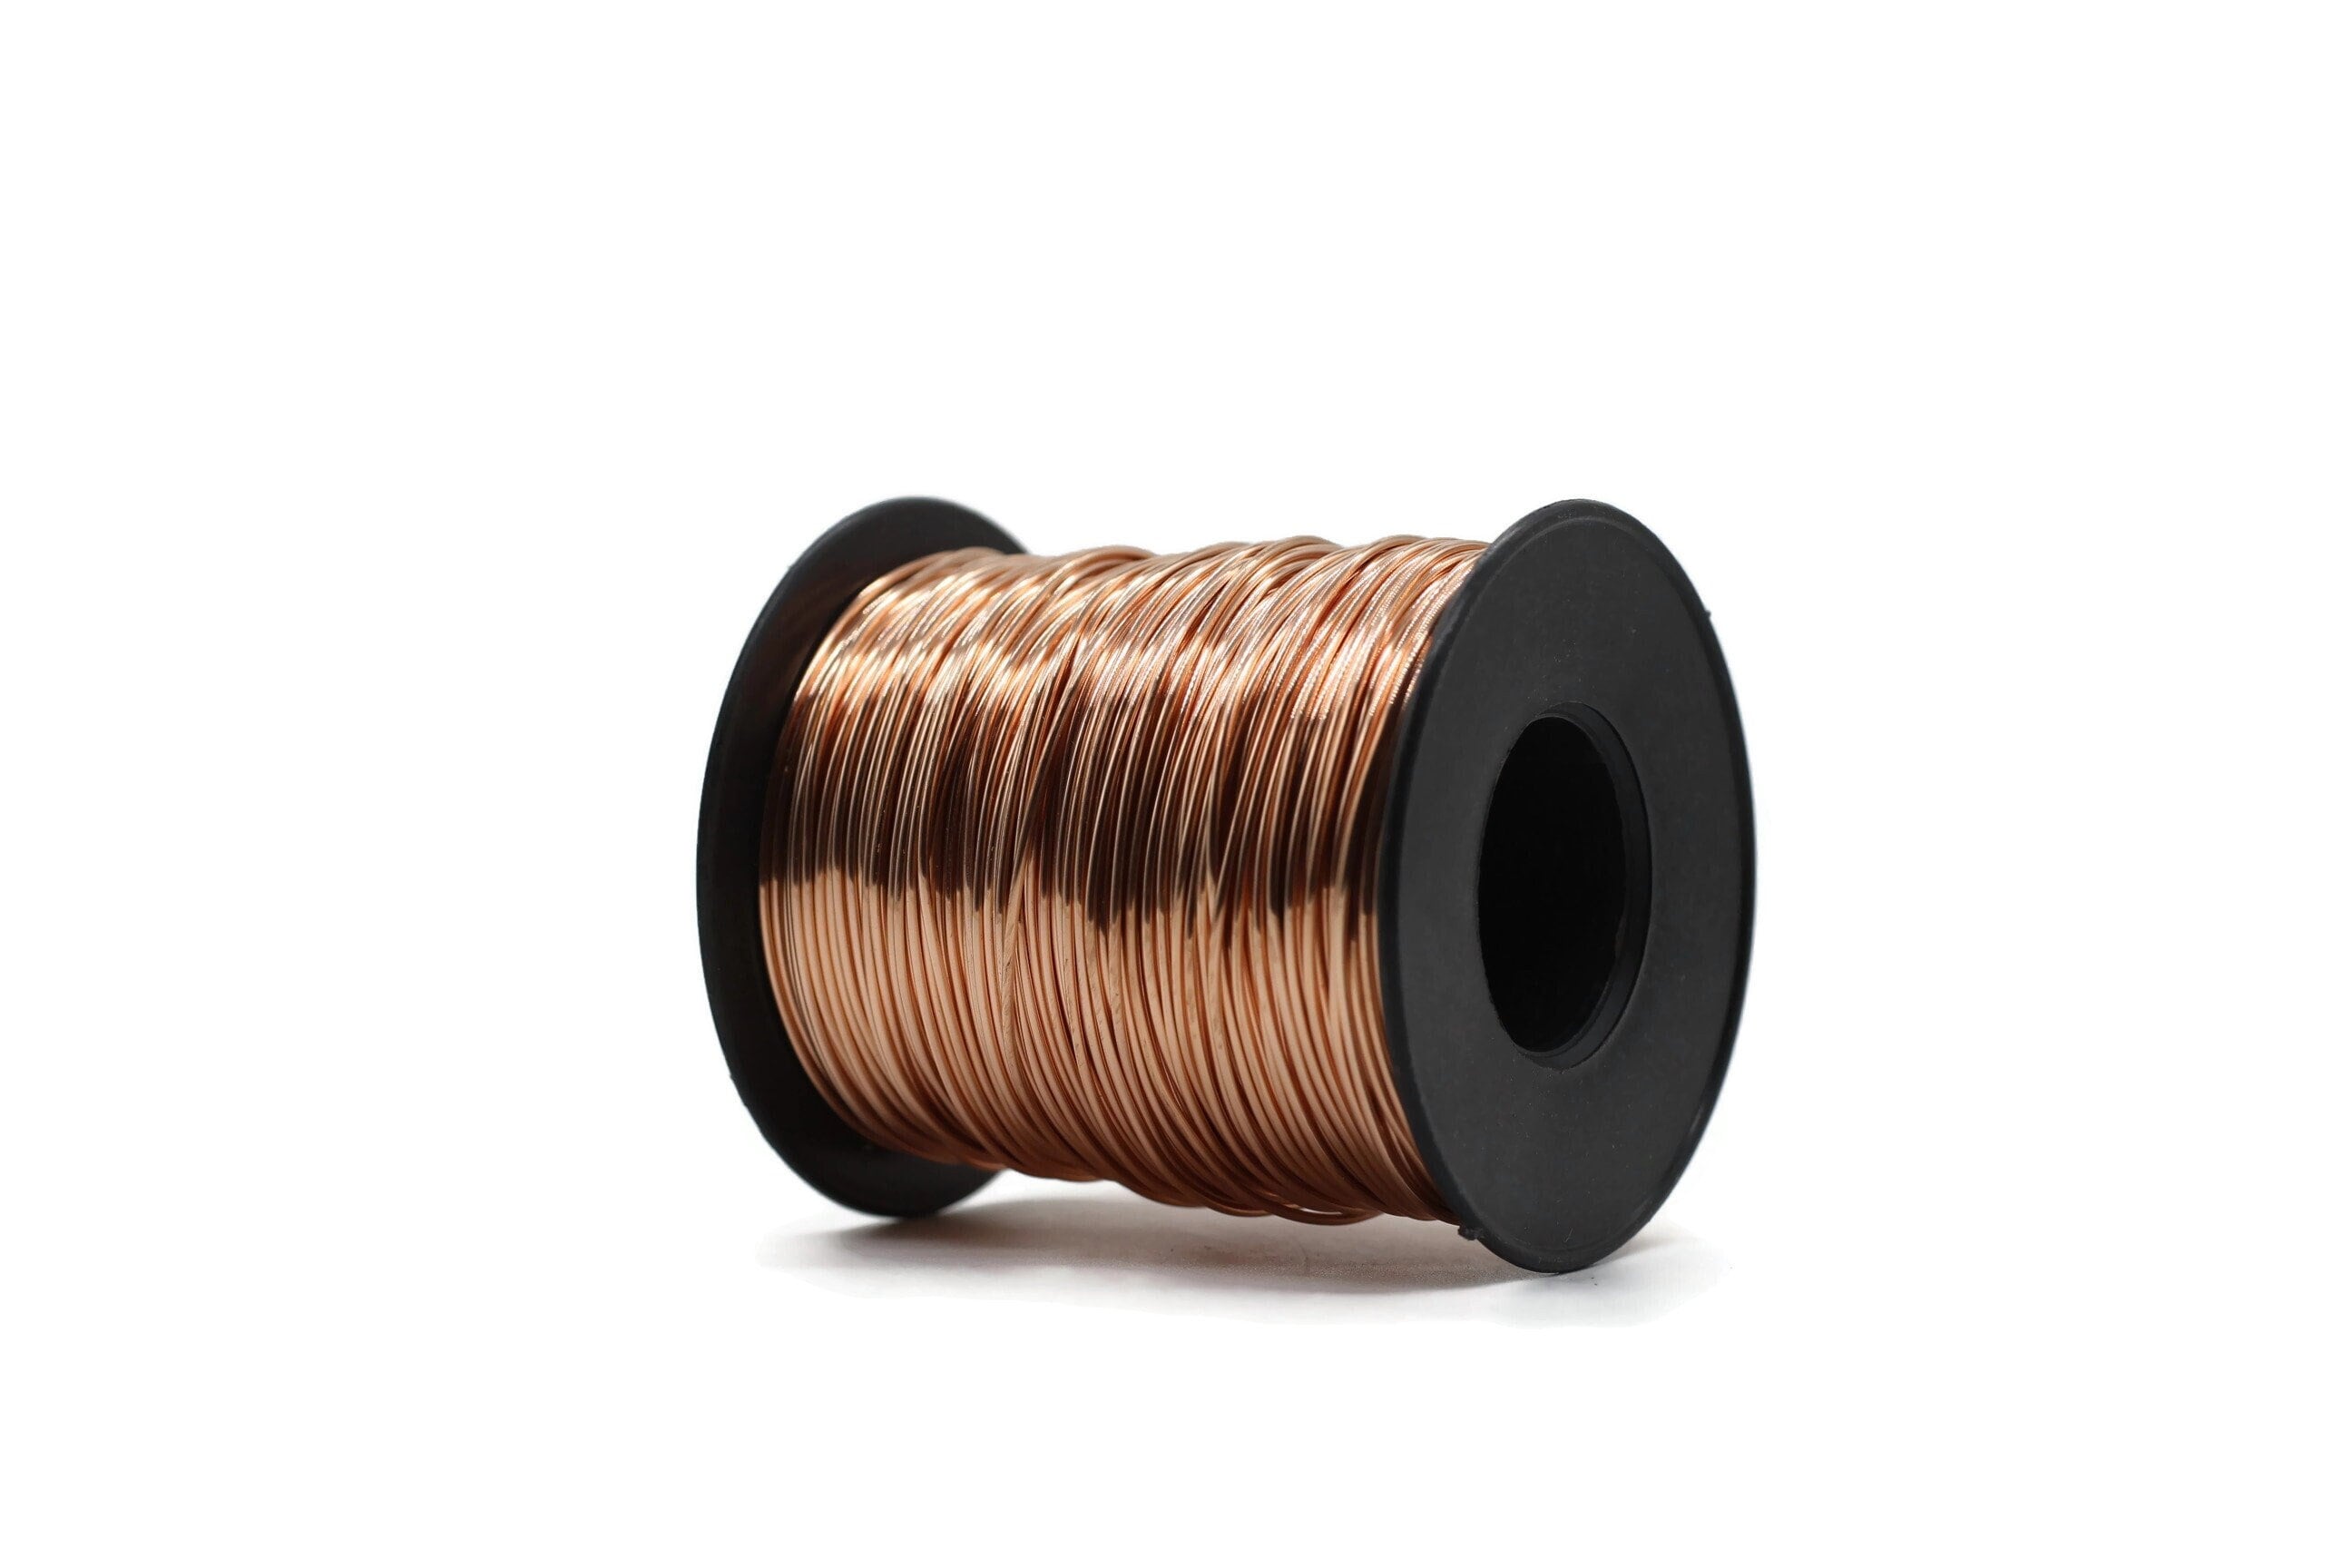 Copper Wire, 22 Gauge Round Wire for Making Jewlery, Non Tarnish Wire, 18  Yard Spool, Wire Wrapping Supplies, Pure Copper Wire, Thin Wire 